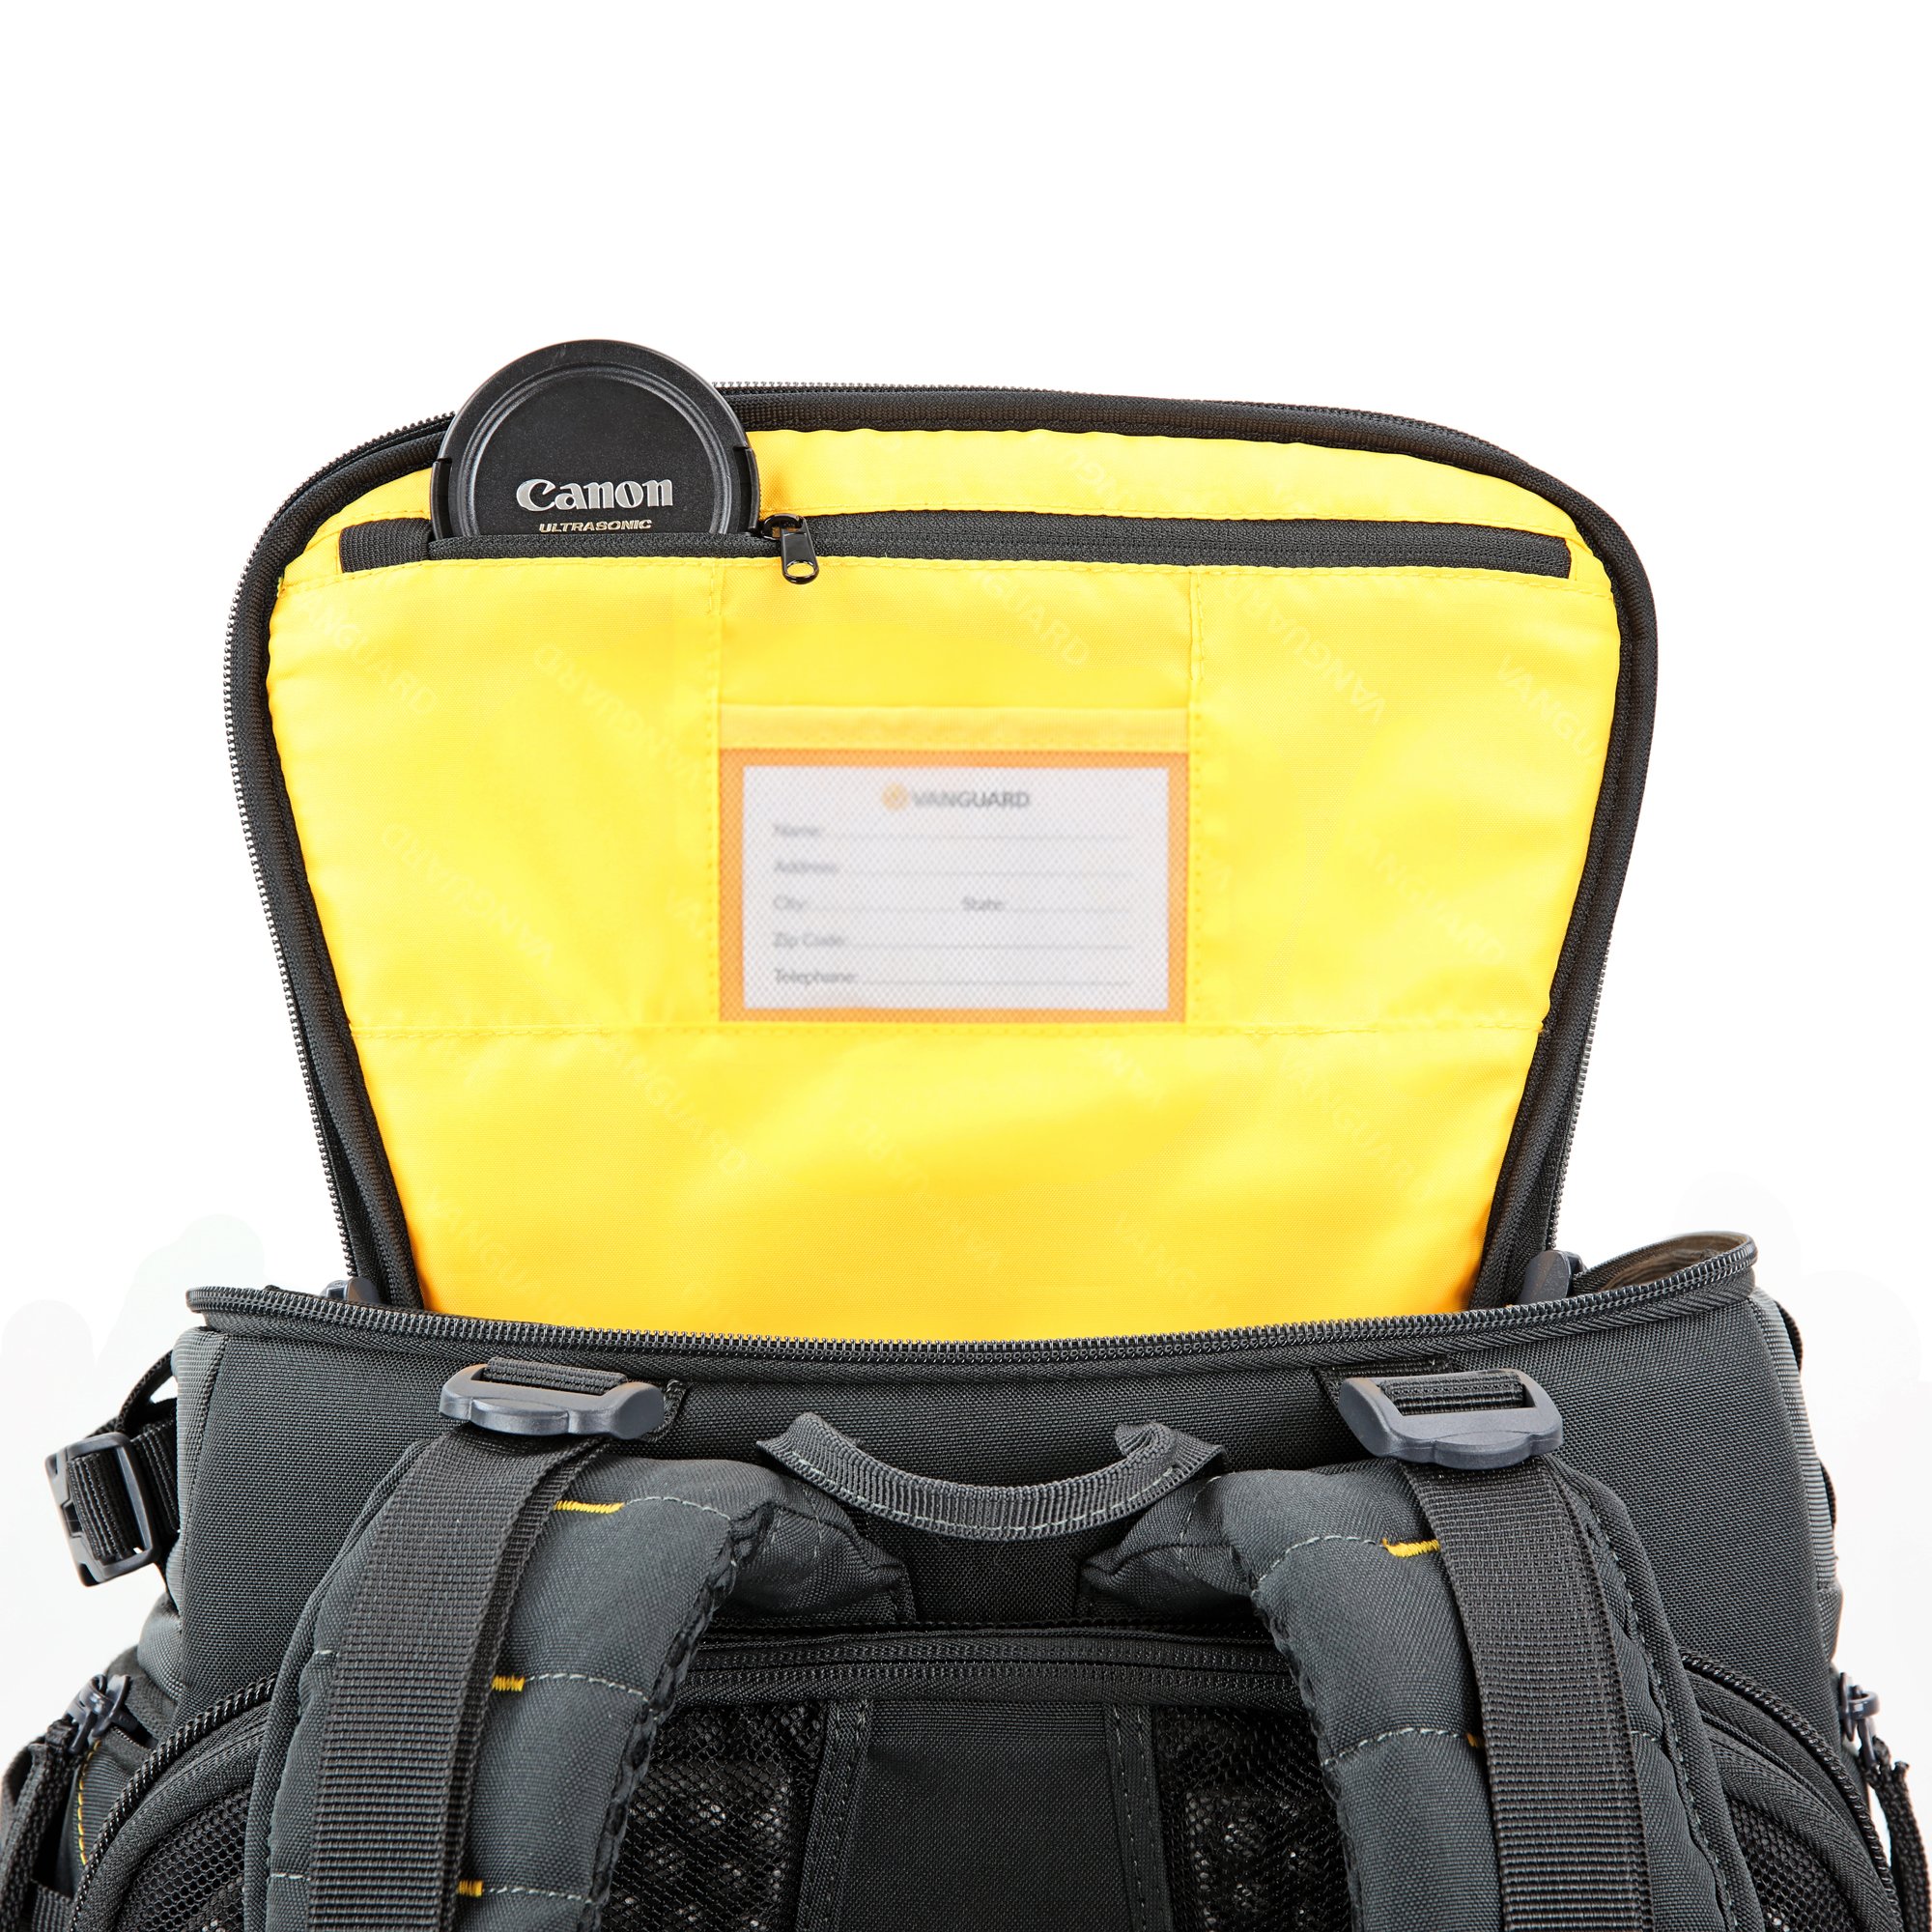 VANGUARD Alta Sky 51D Camera Backpack for Sony, Nikon, Canon, DSLR, Drones, Grey, AltaSky51D